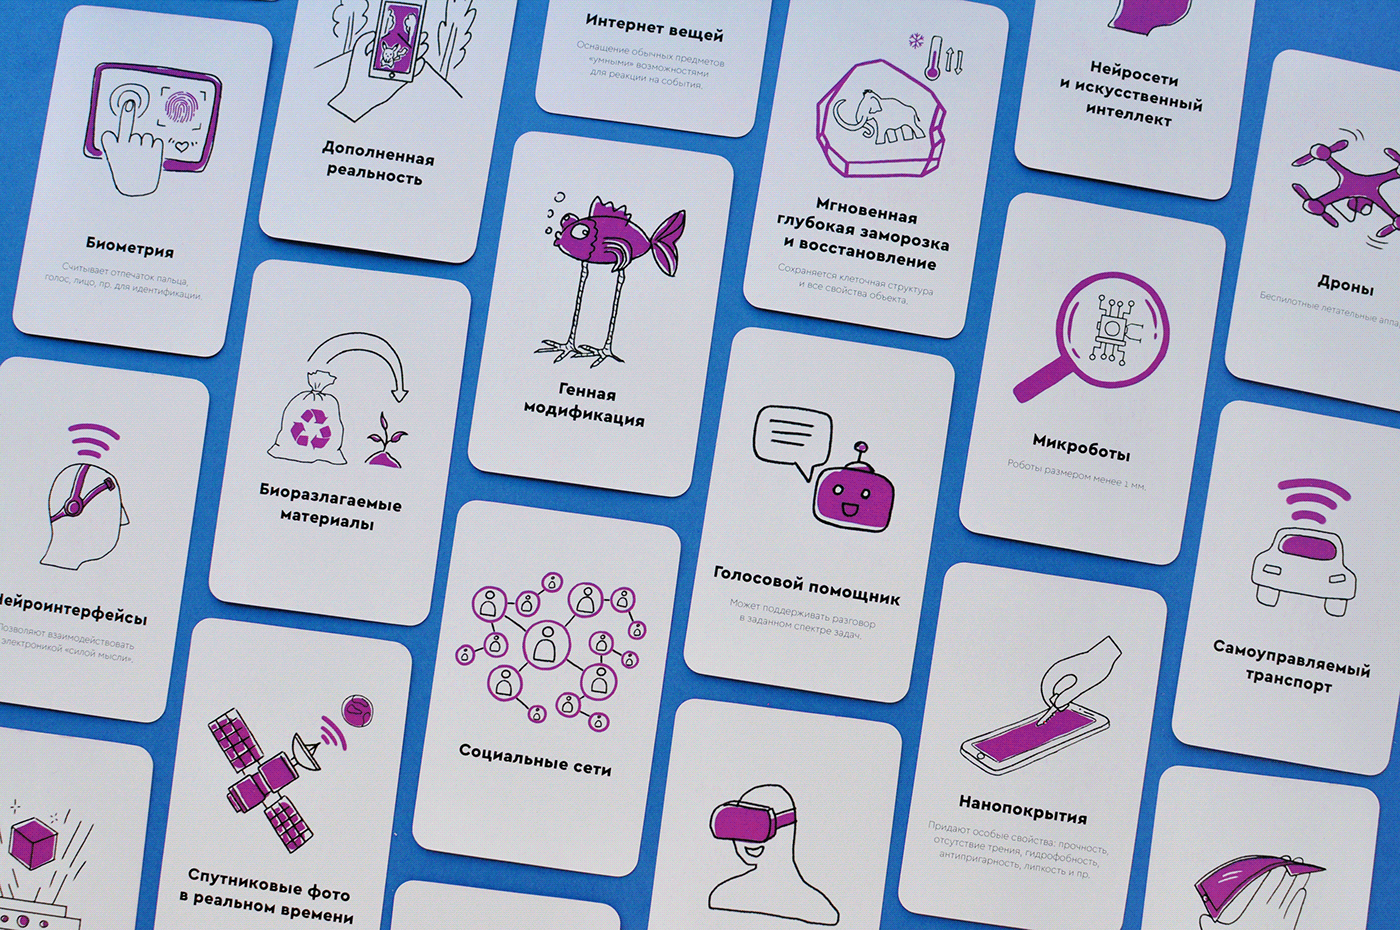 #illustration board game braine storm Buisness Cards illustrations creative game design thinking facilitation ideas Startup